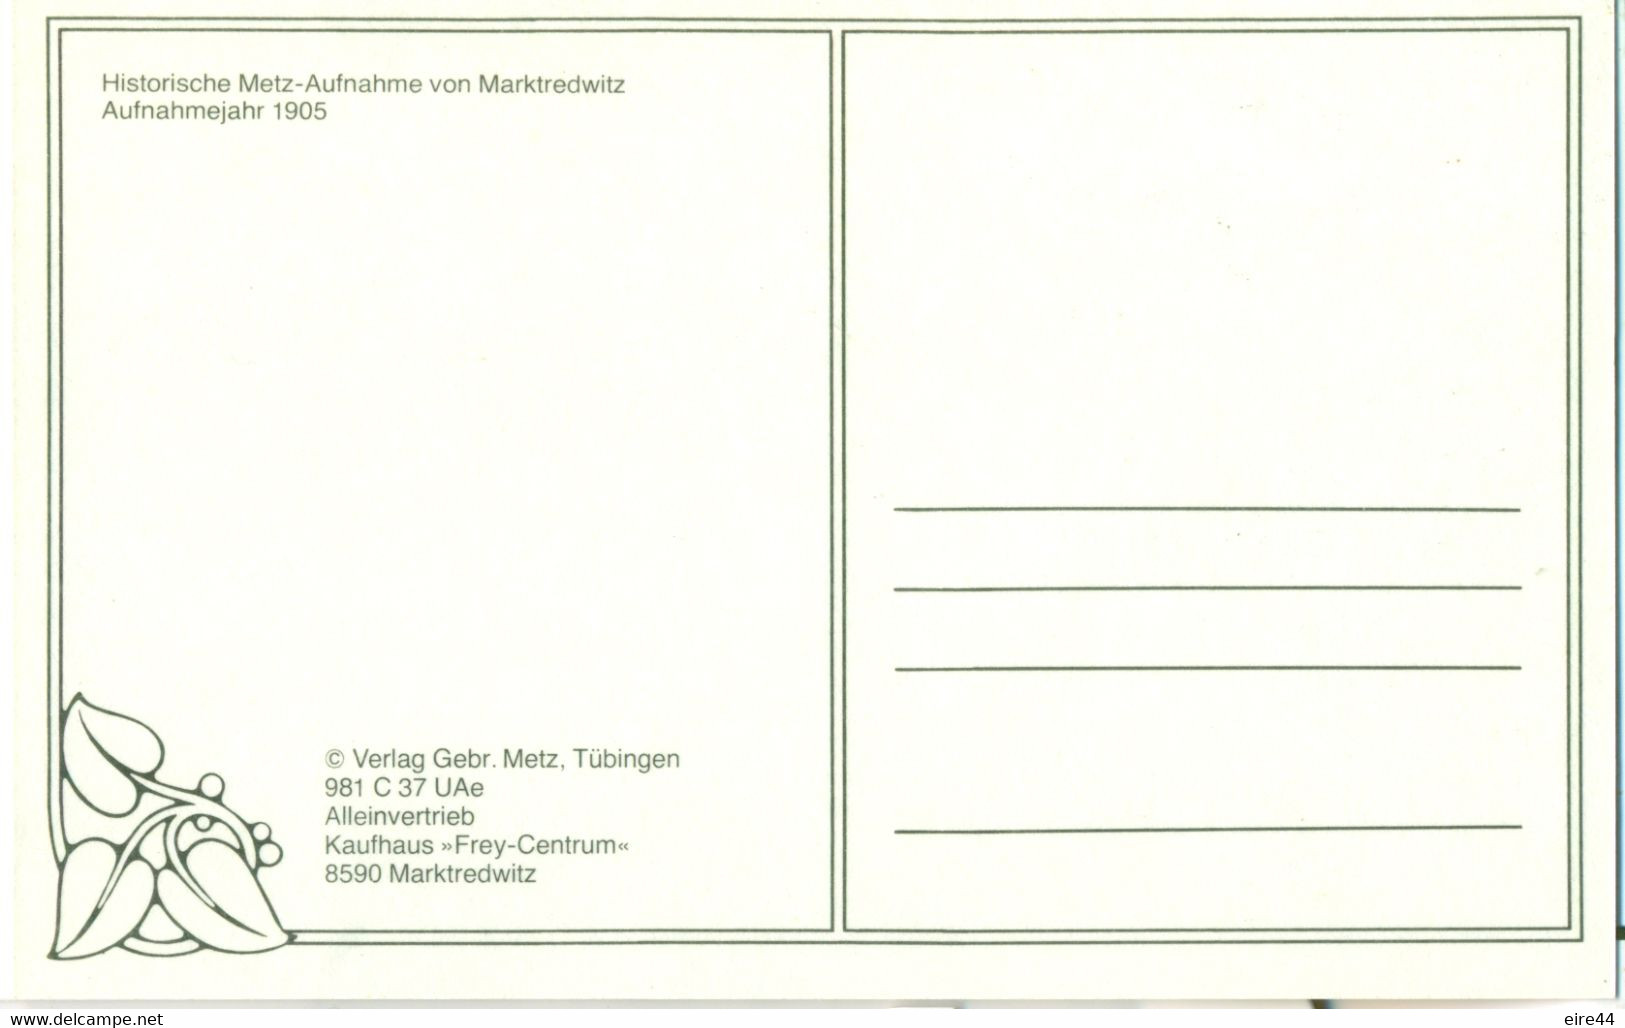 Germany Booklet 8 postcards City Marktredwitz Bavaria 1900 - 1910 Mint sole sale department